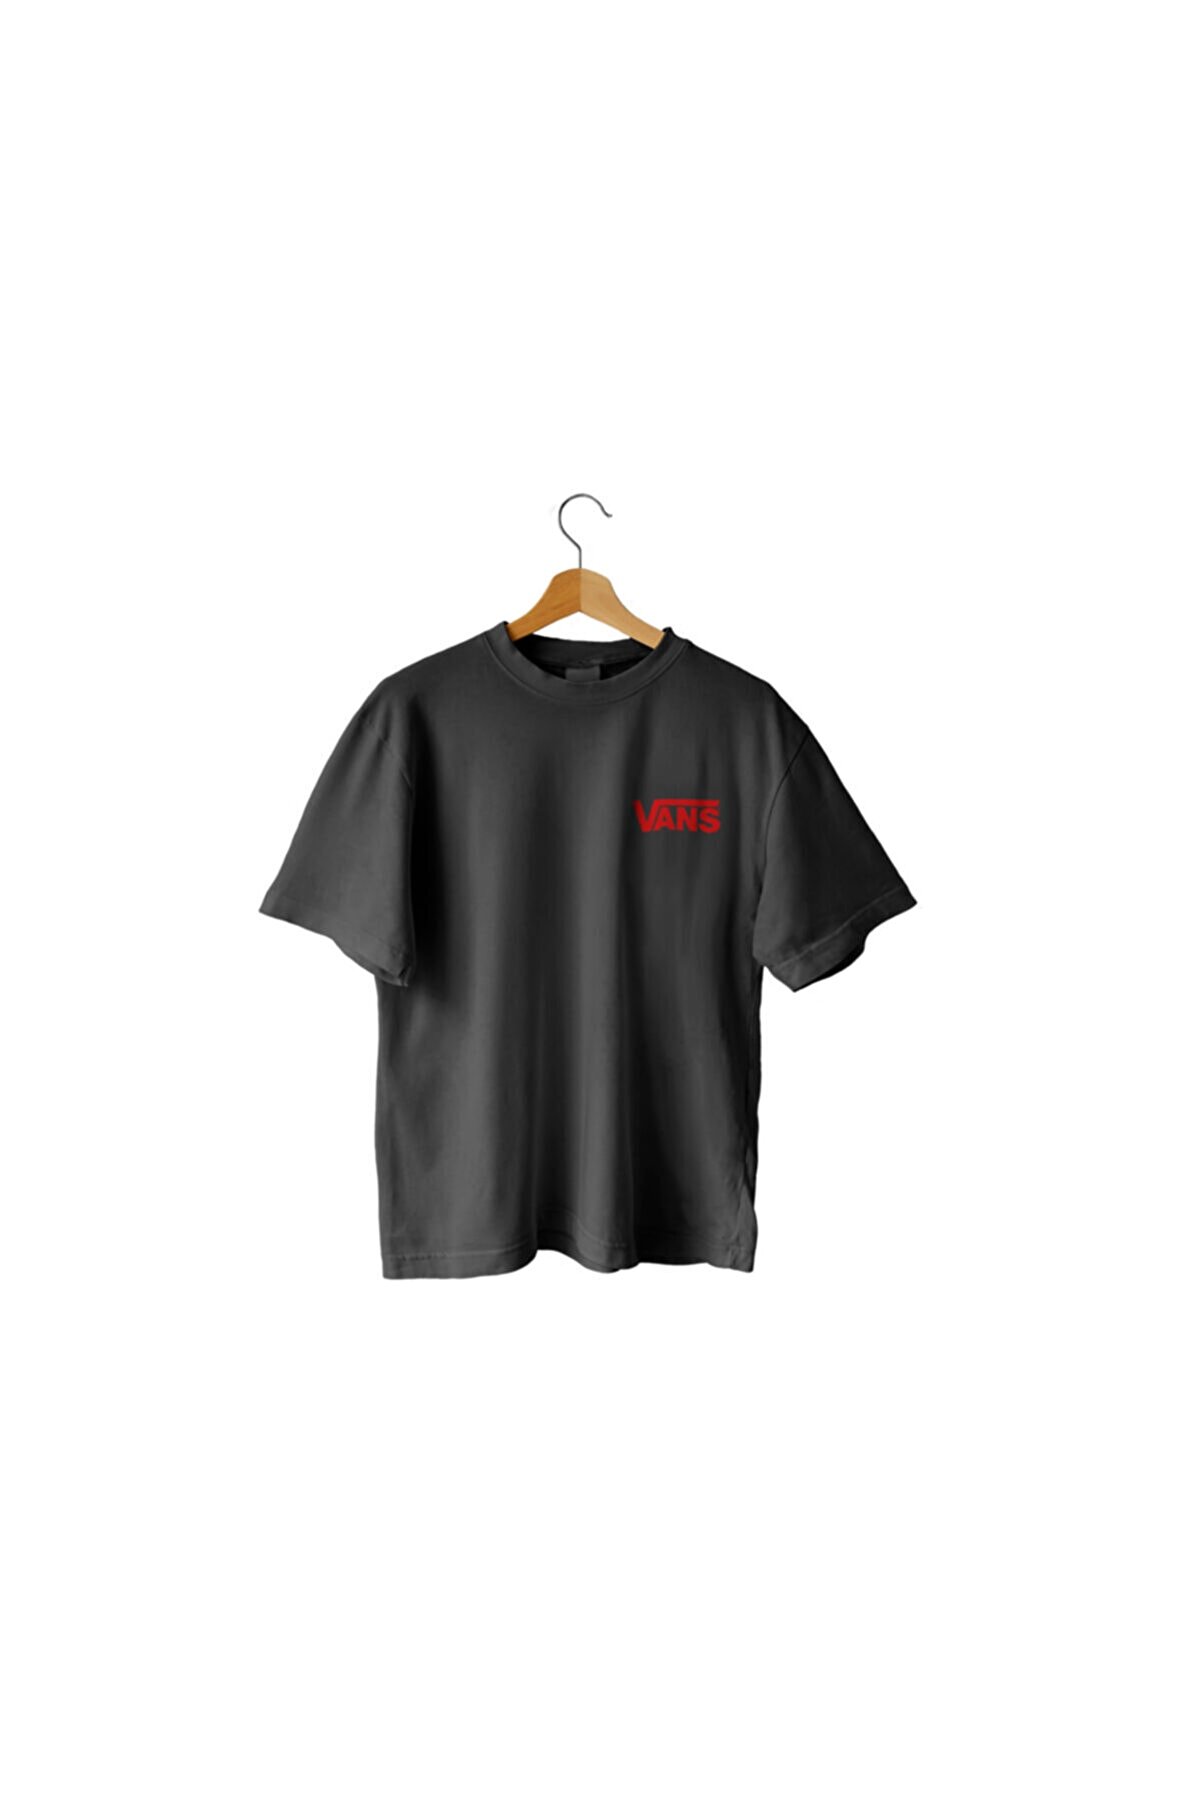 Vans Unisex Siyah Oversize T-shirt